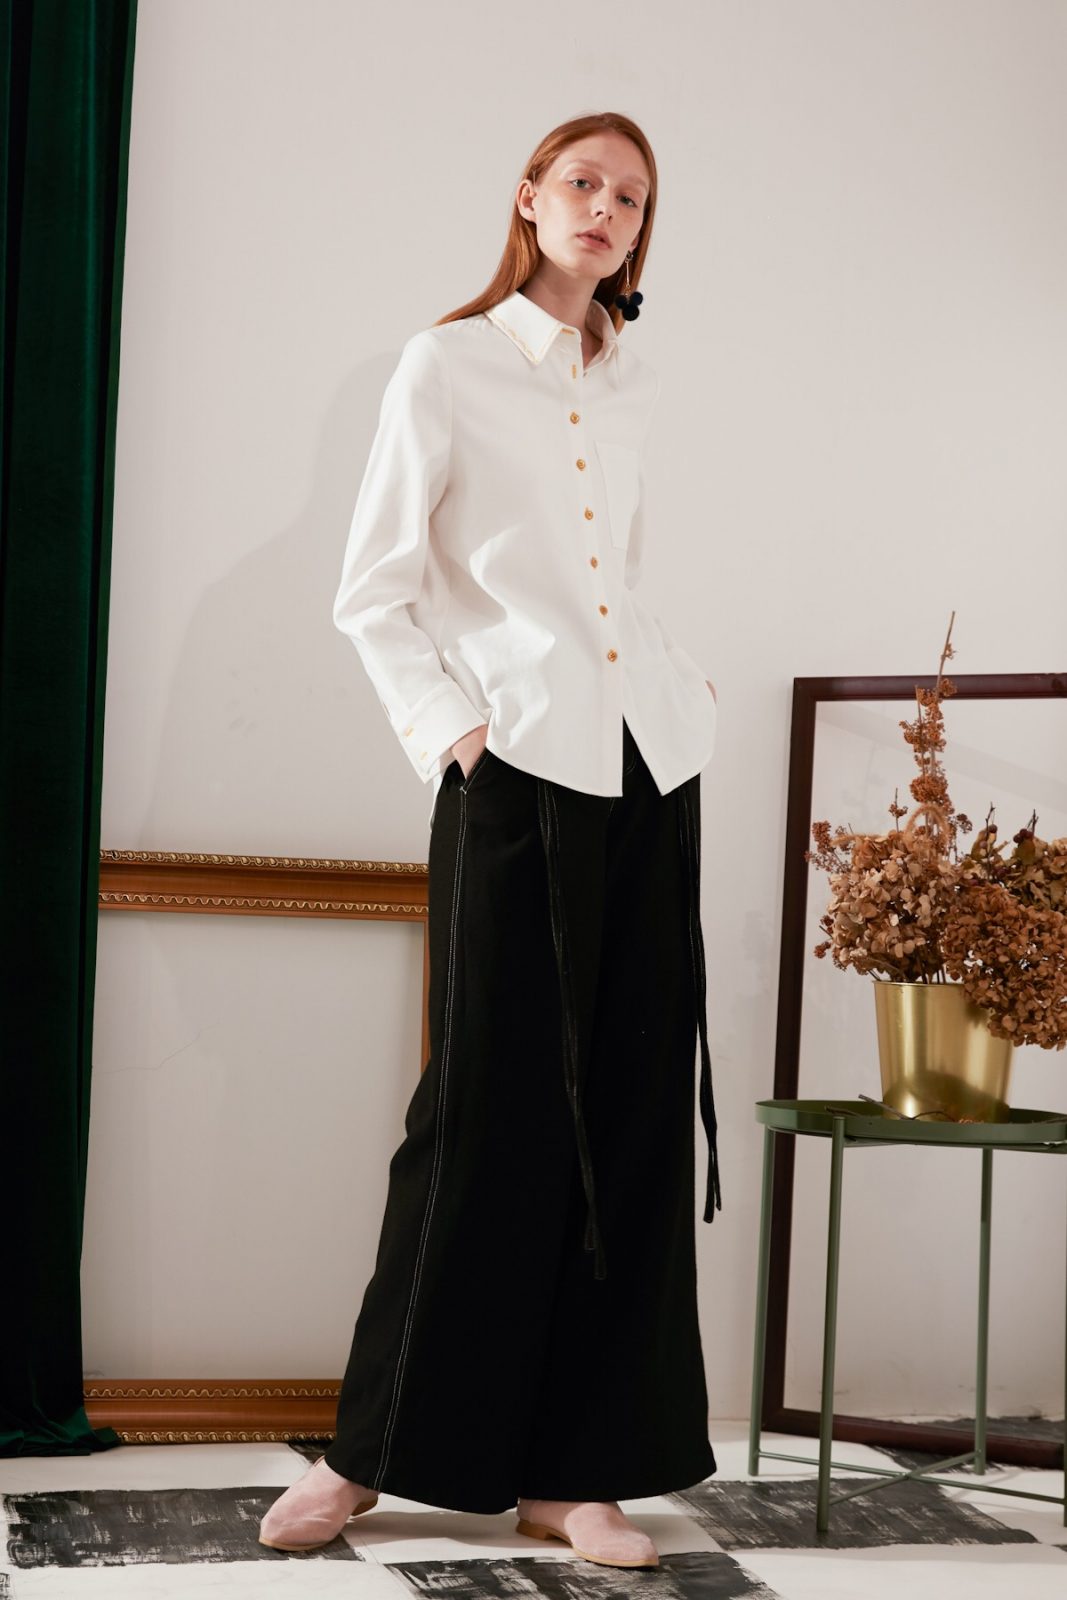 SKYE modern minimalist women fashion long sleeve shirt with gold embroidered collar white